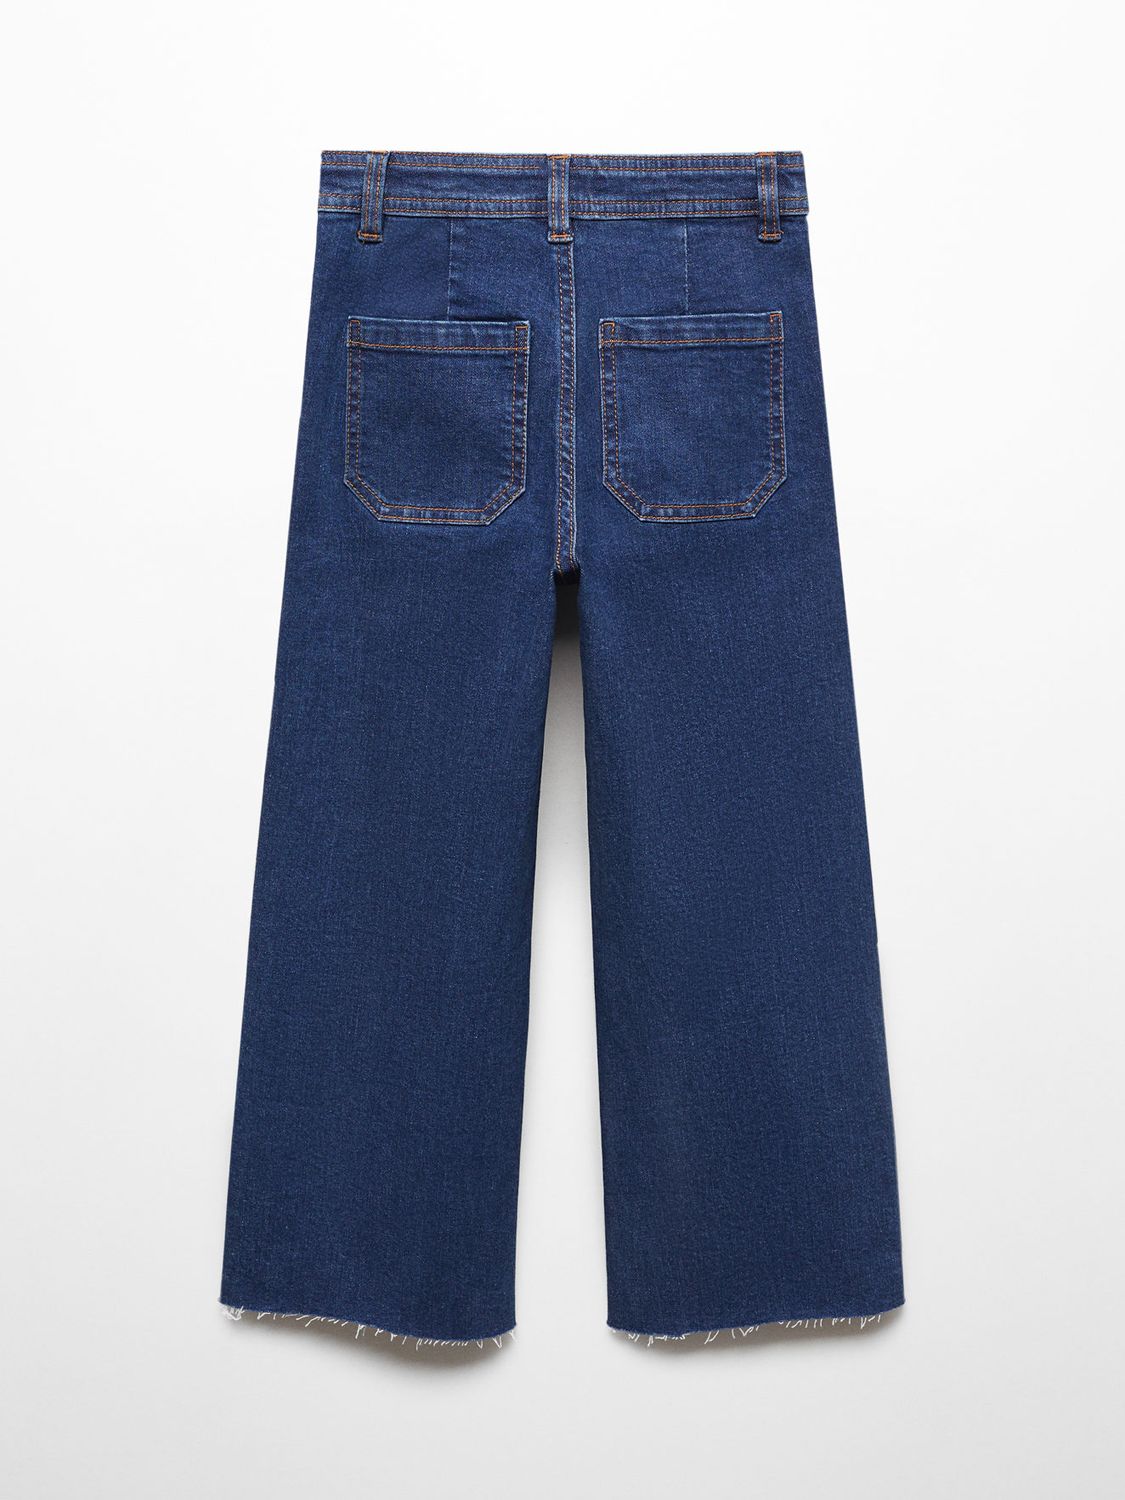 Mango Kids' High Waist Seamless Jeans, Blue, 10 years